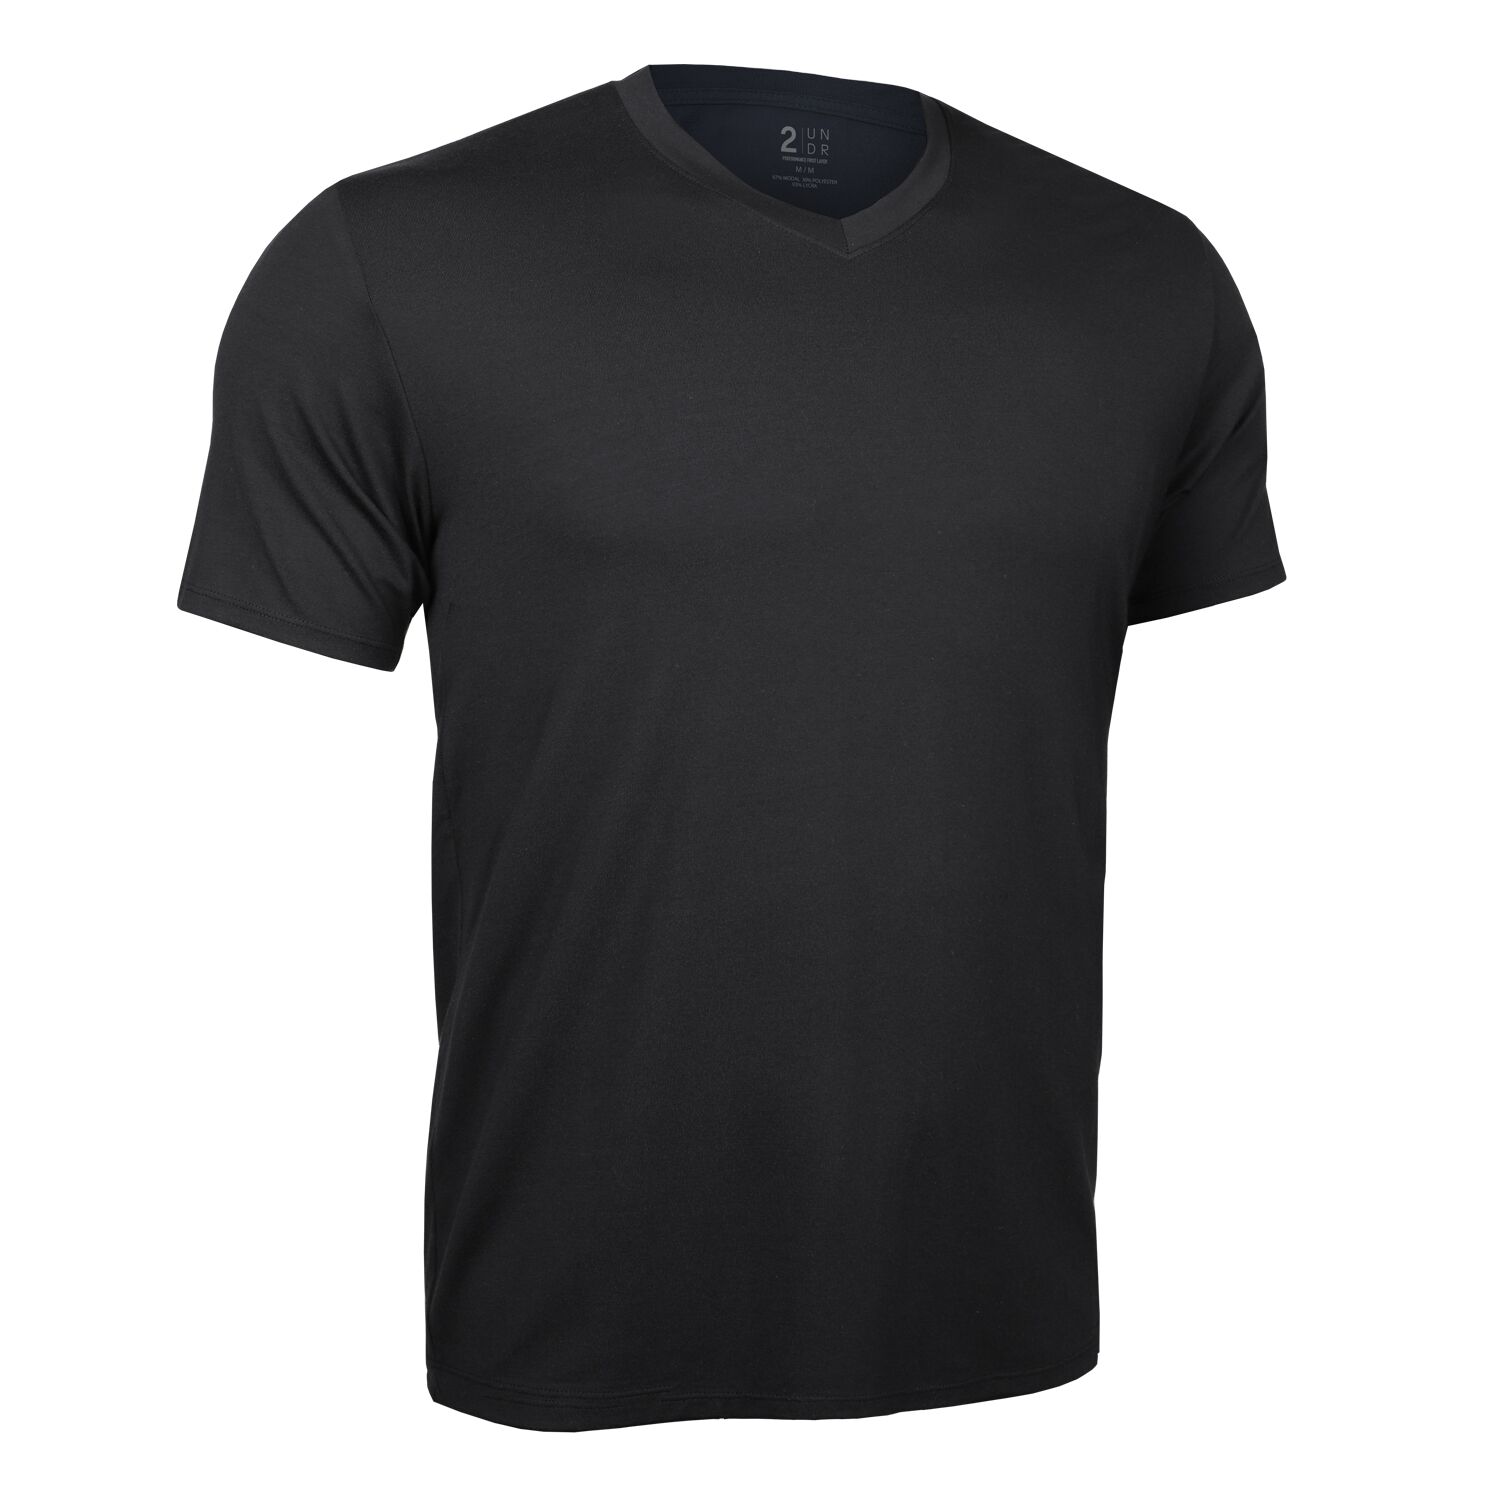 2UNDR Men's Luxury Lightweight Breathable V-Neck Tee Shirts 2U09VN | eBay